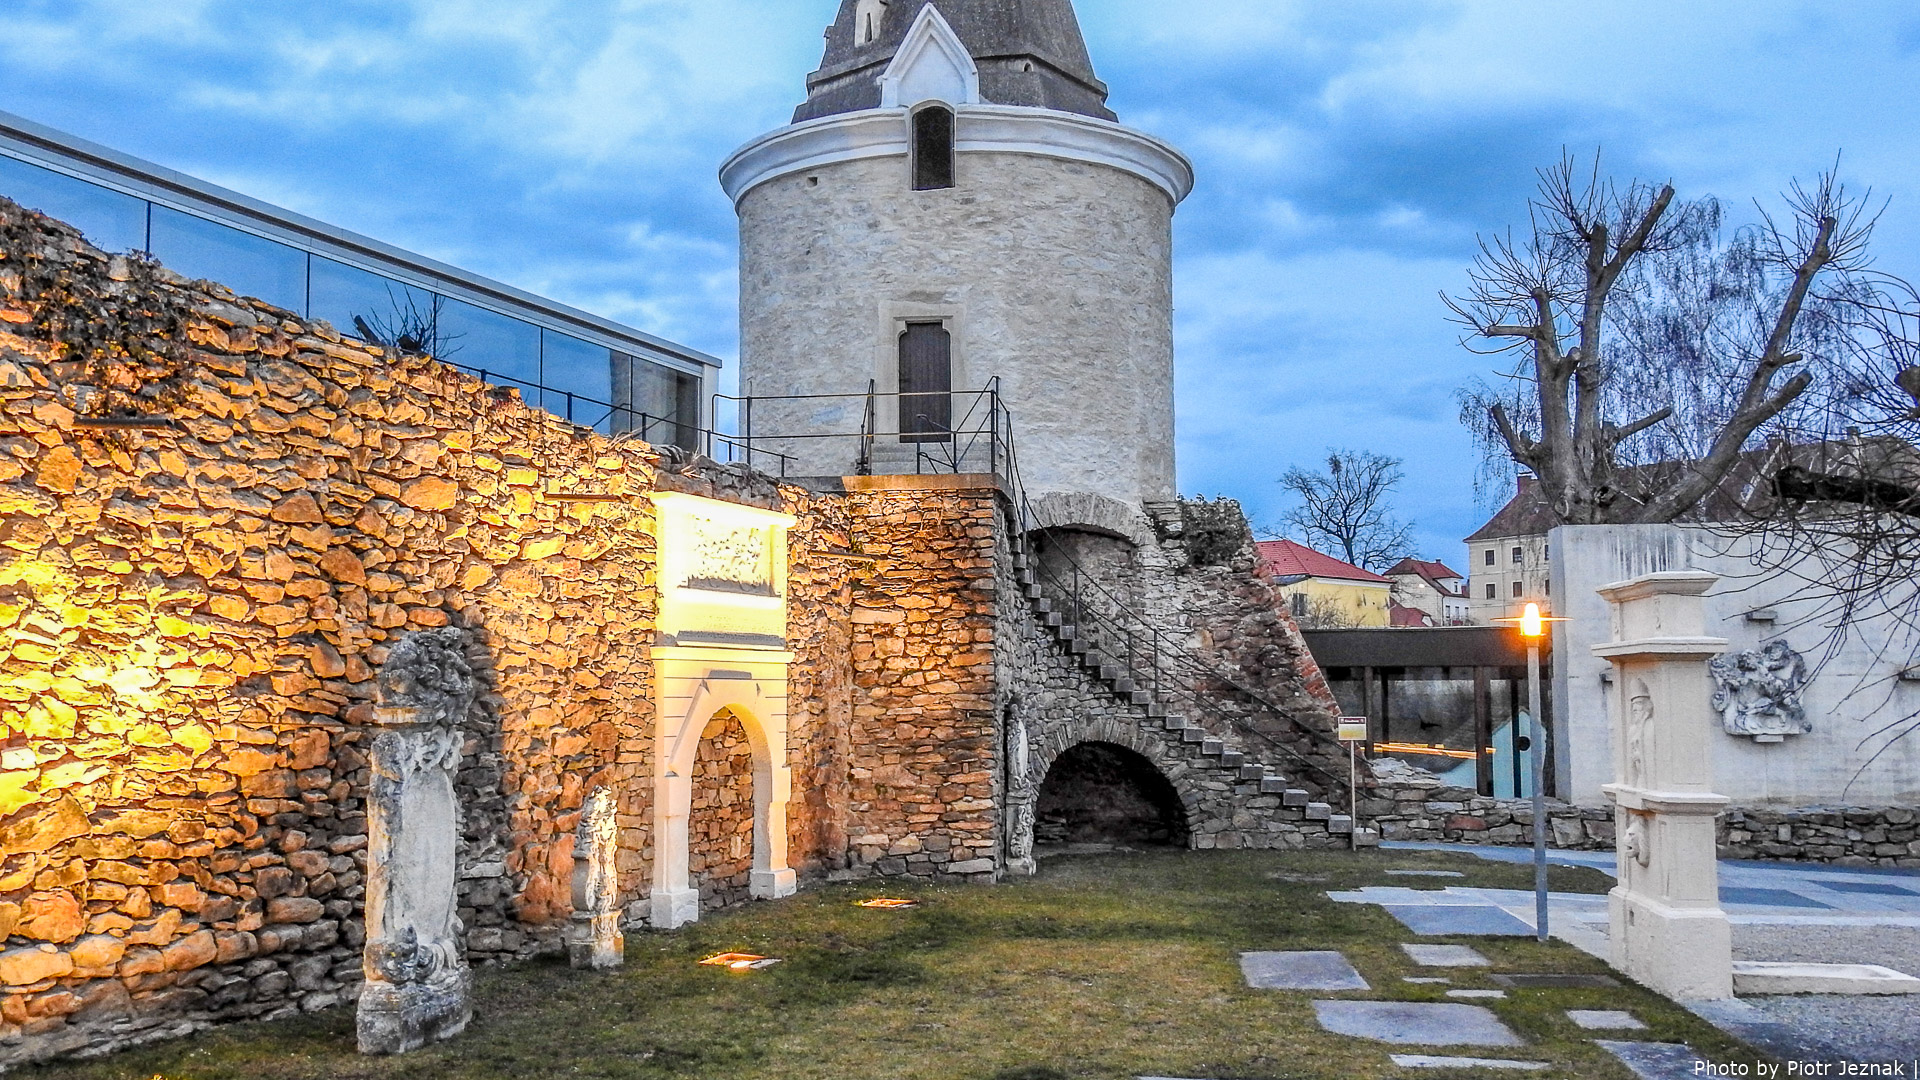 The Grasel-Turm